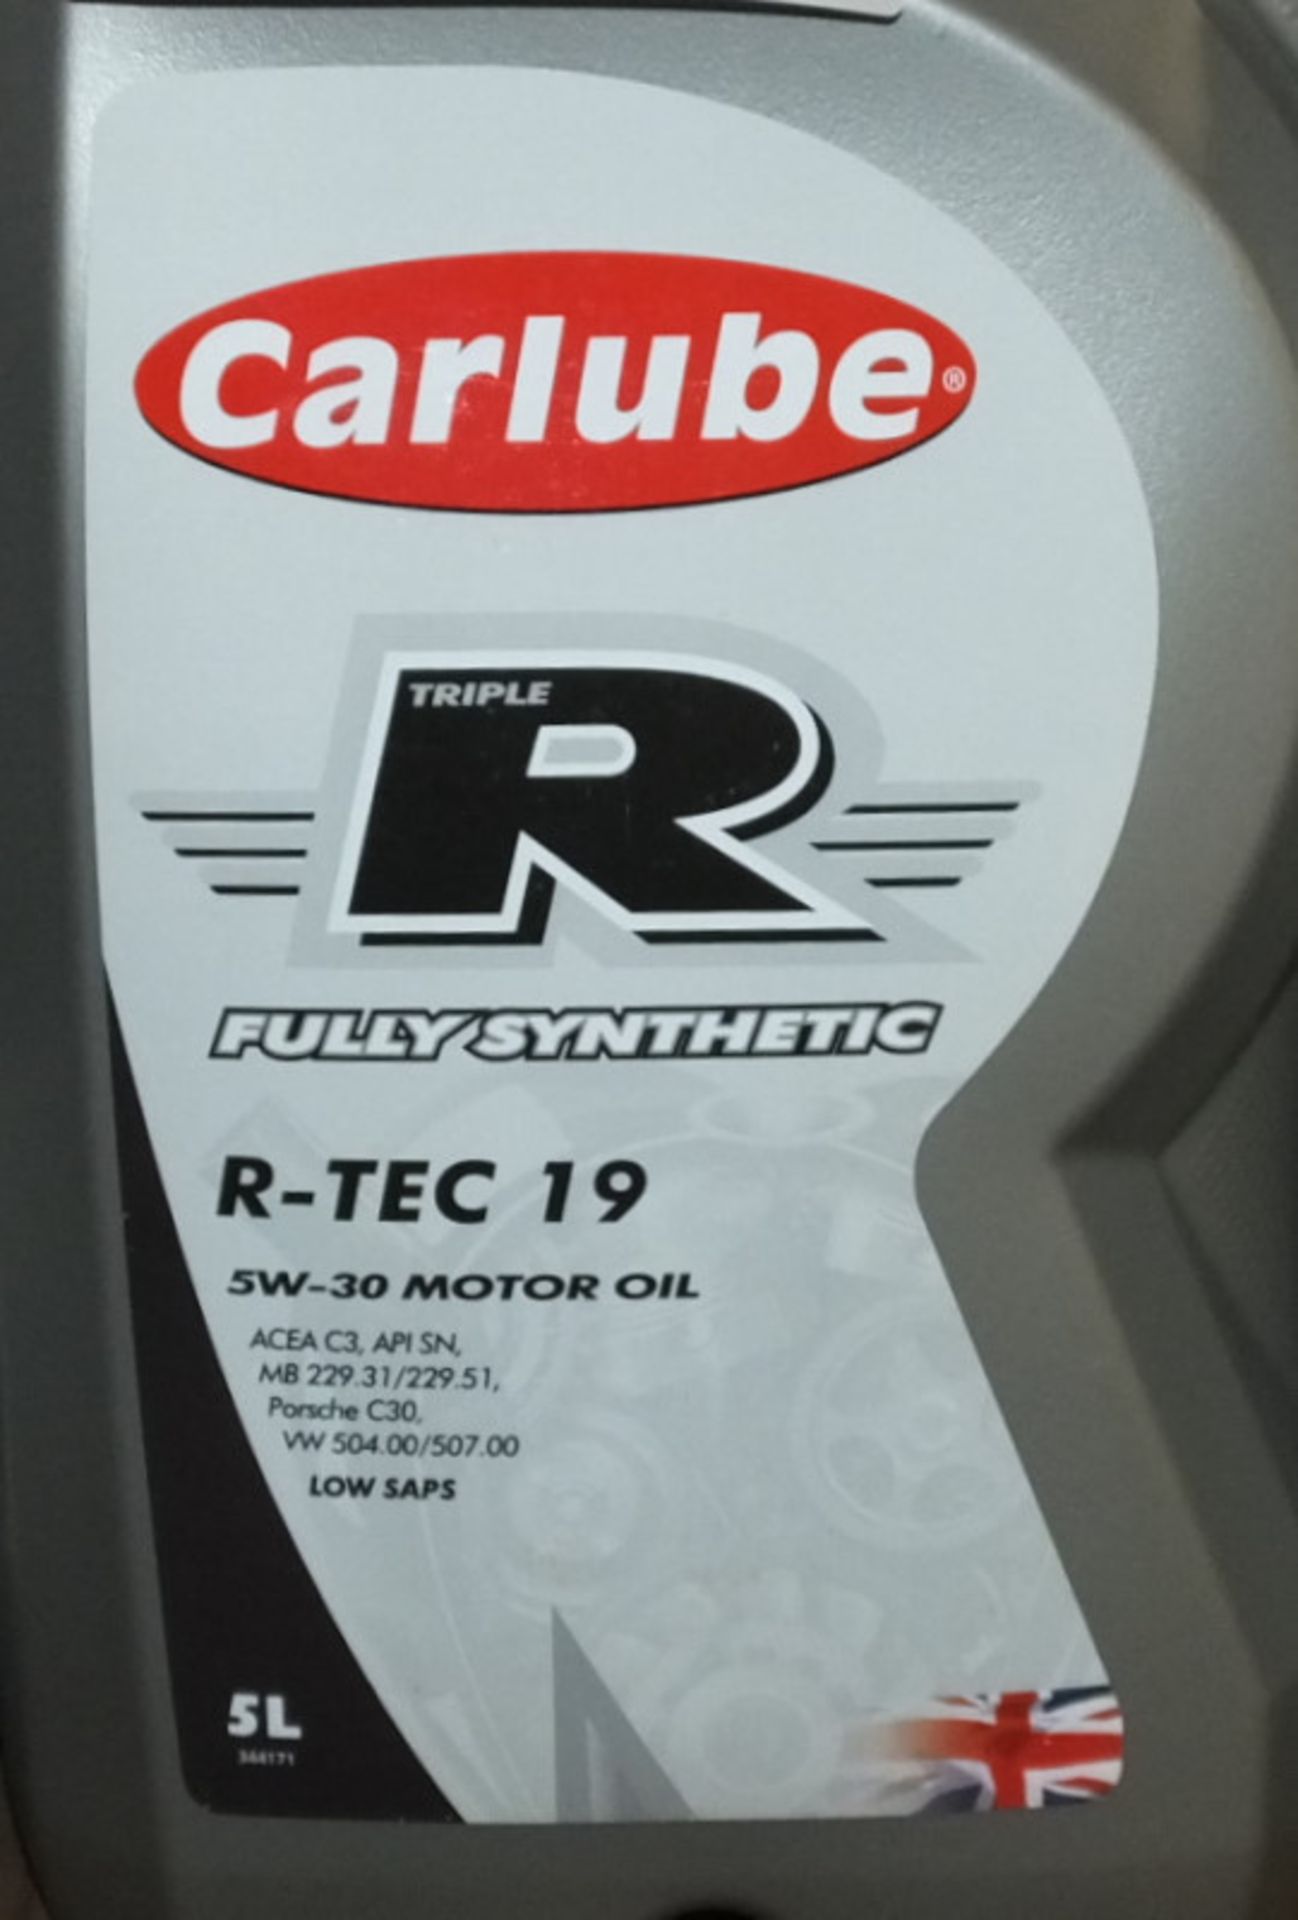 5x Carlube Triple R Fully Synthetic R-TEC 19 5W-30 Motor Oil - 5L - Image 2 of 2